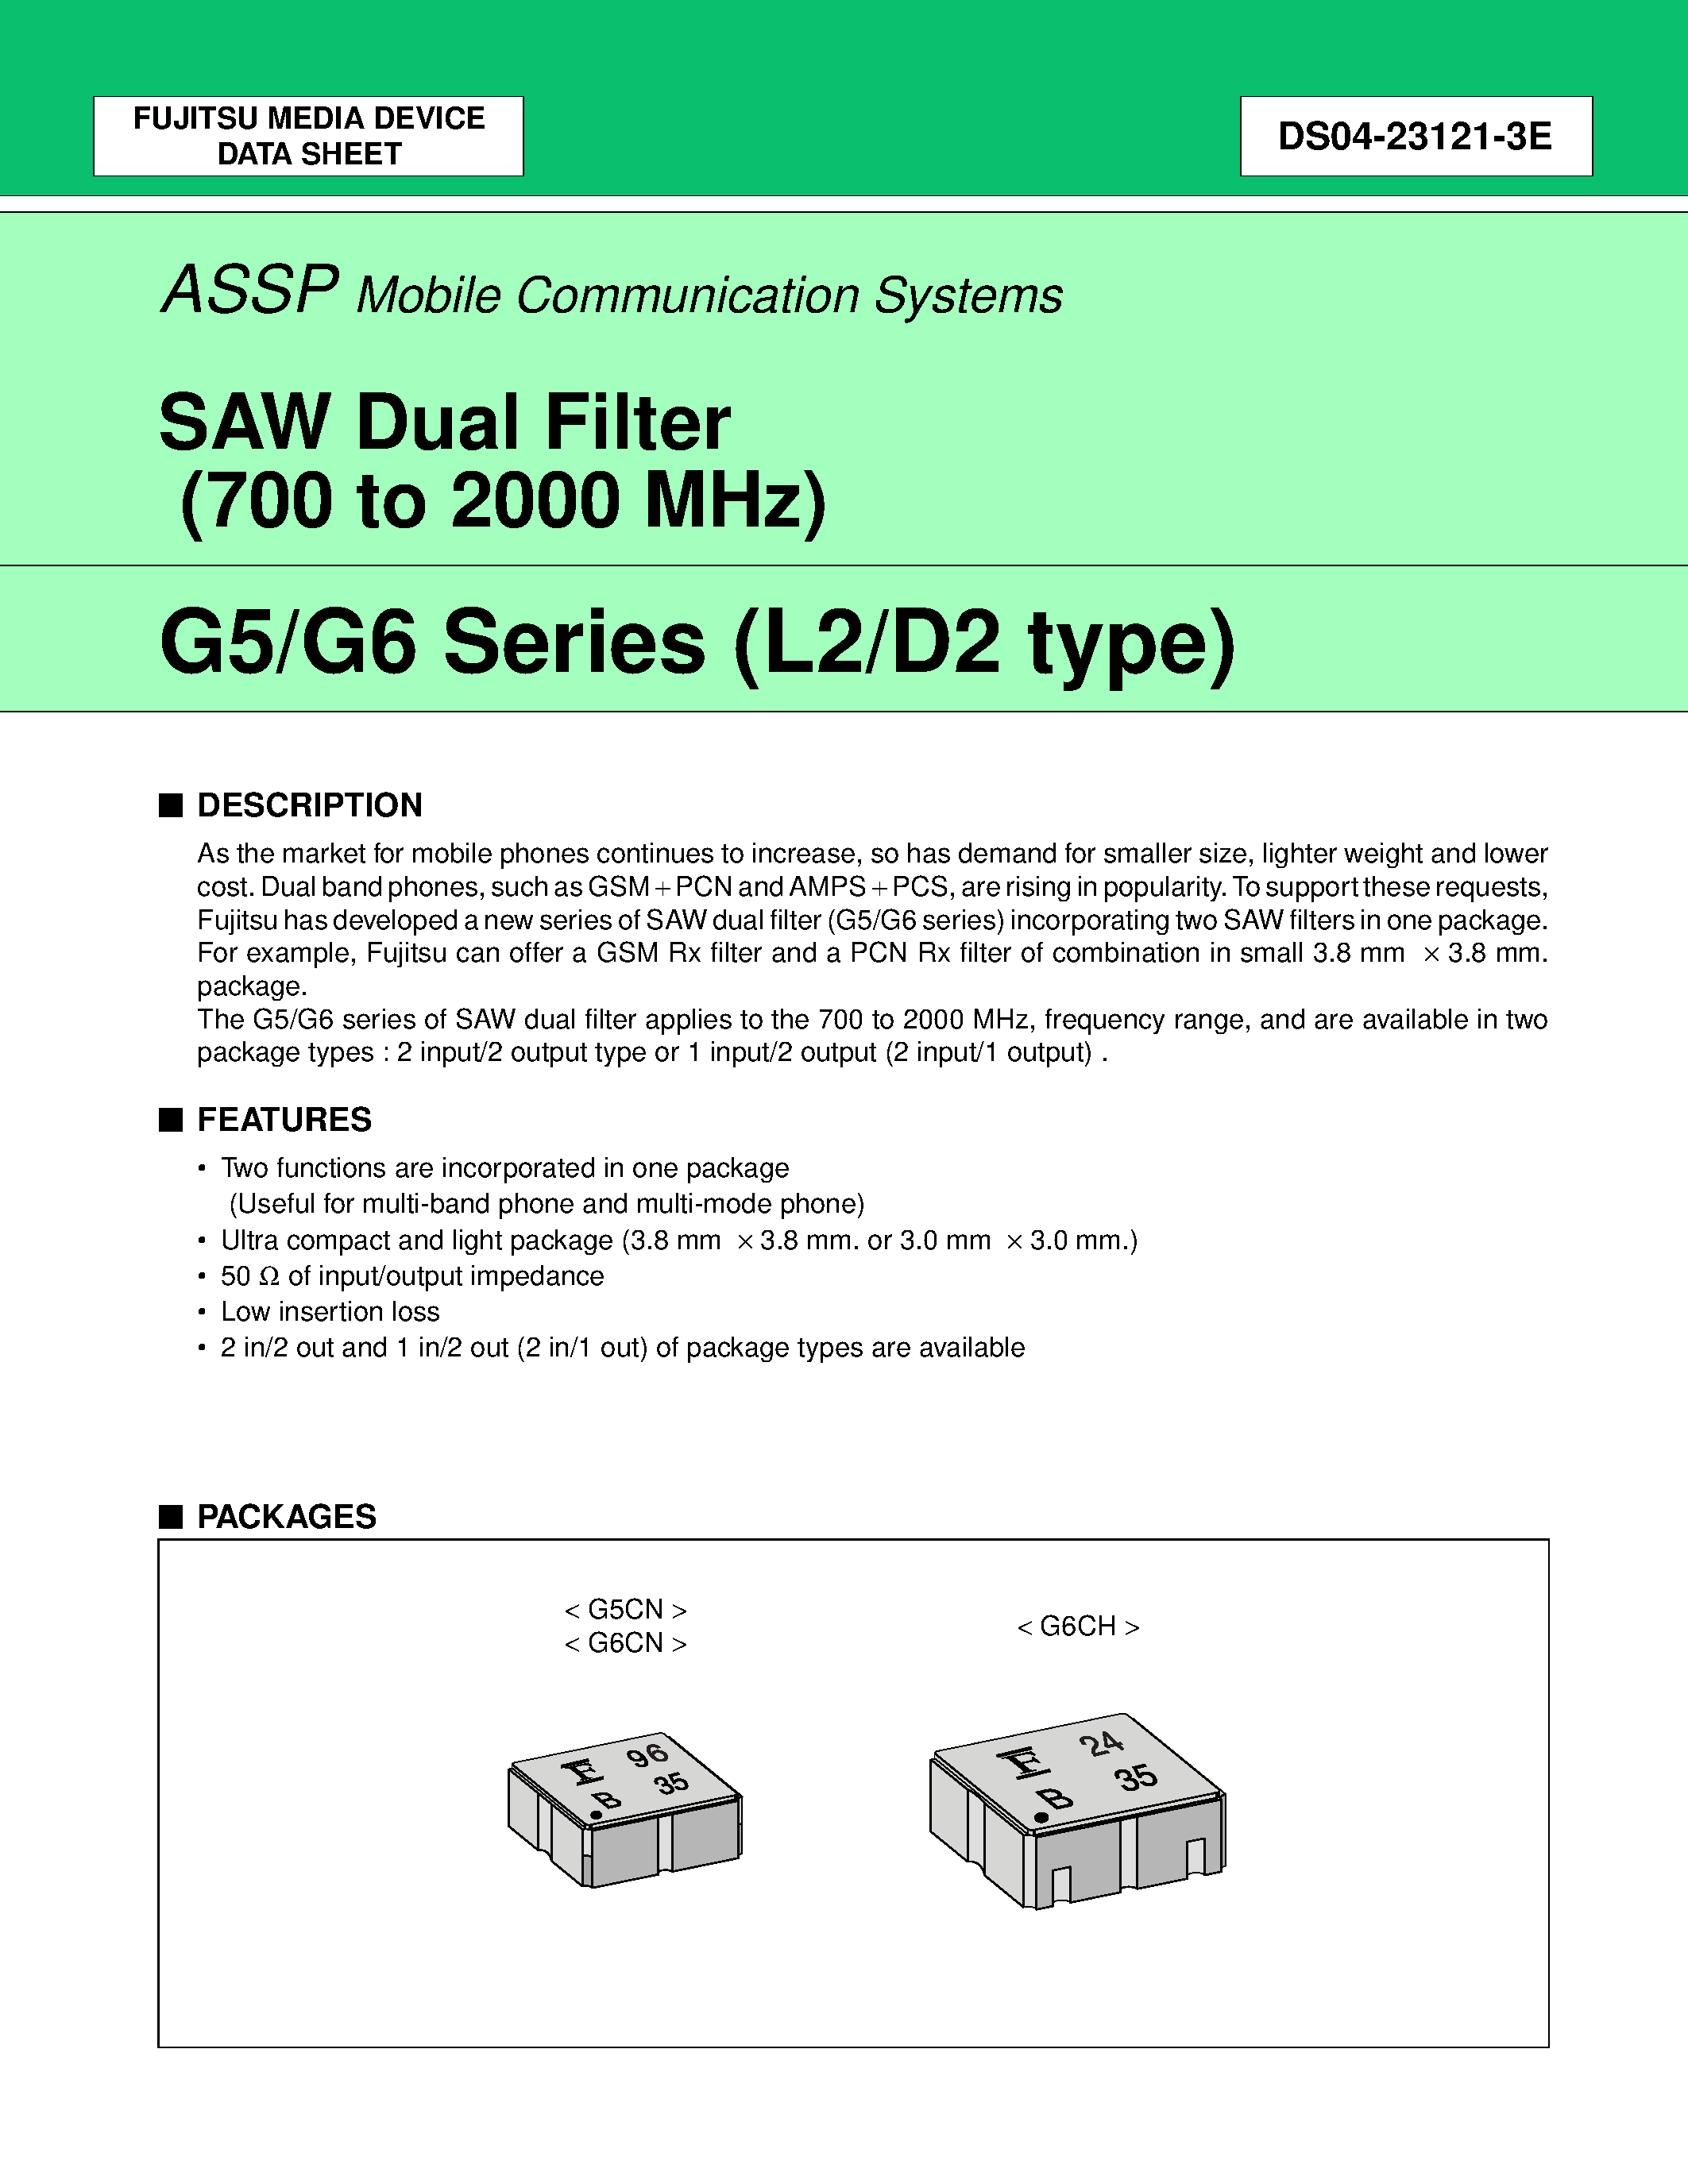 Даташит FAR-G5CN-877M50-D292-U - SAW Dual Filter (700 to 2000 MHz) страница 1